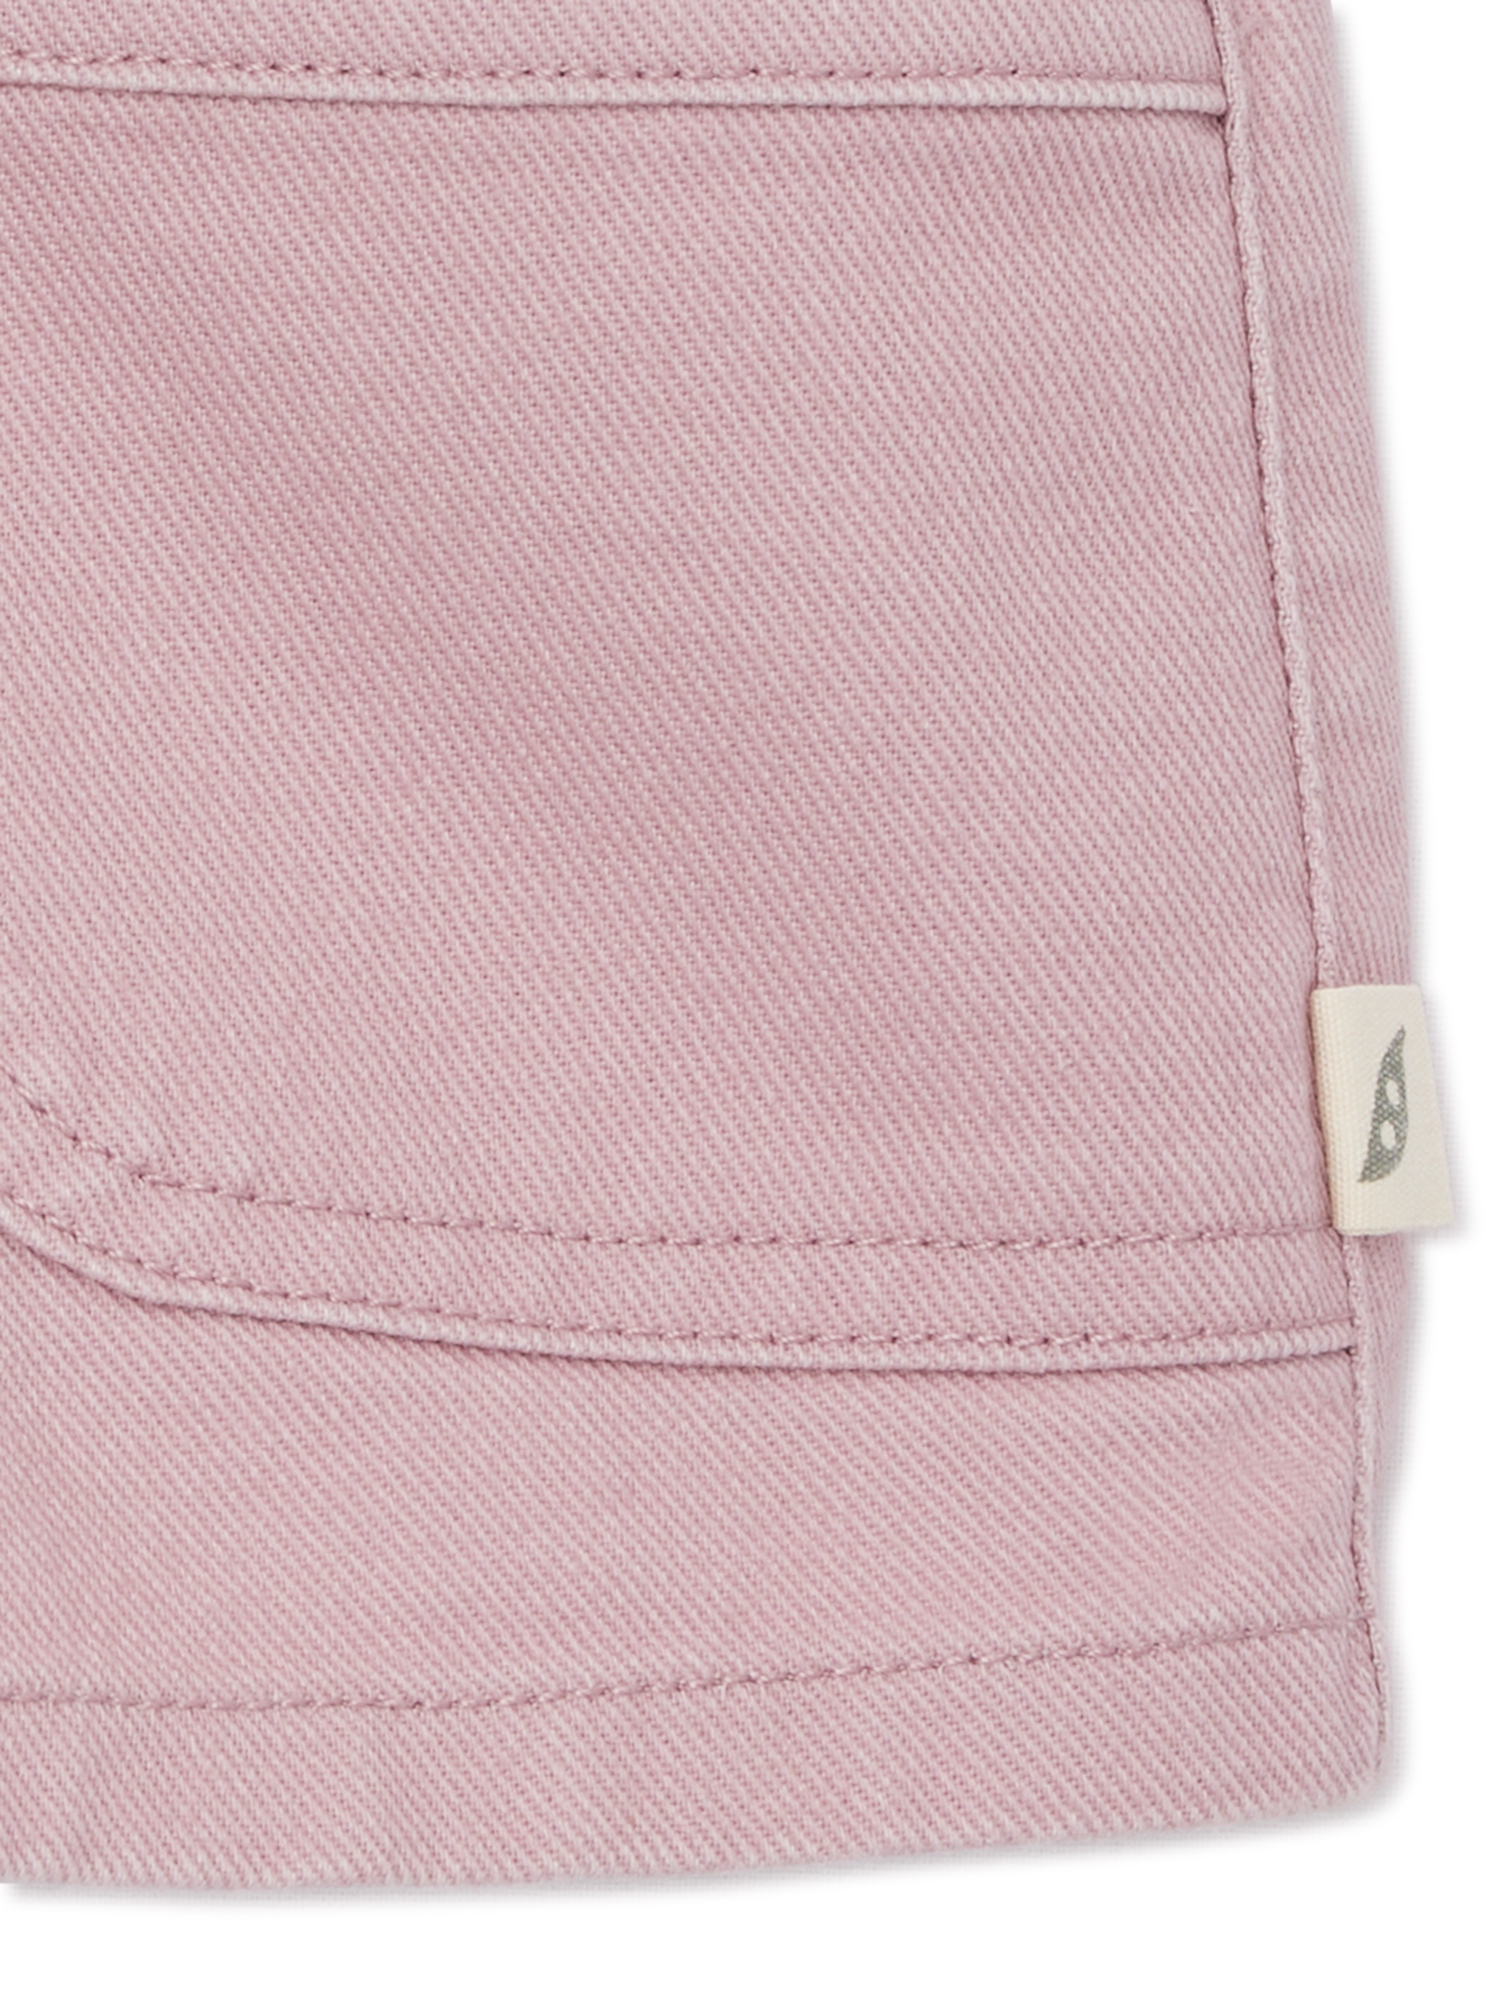 easy-peasy Toddler Girls Denim Shorts, Sizes 12M-5T - image 4 of 4